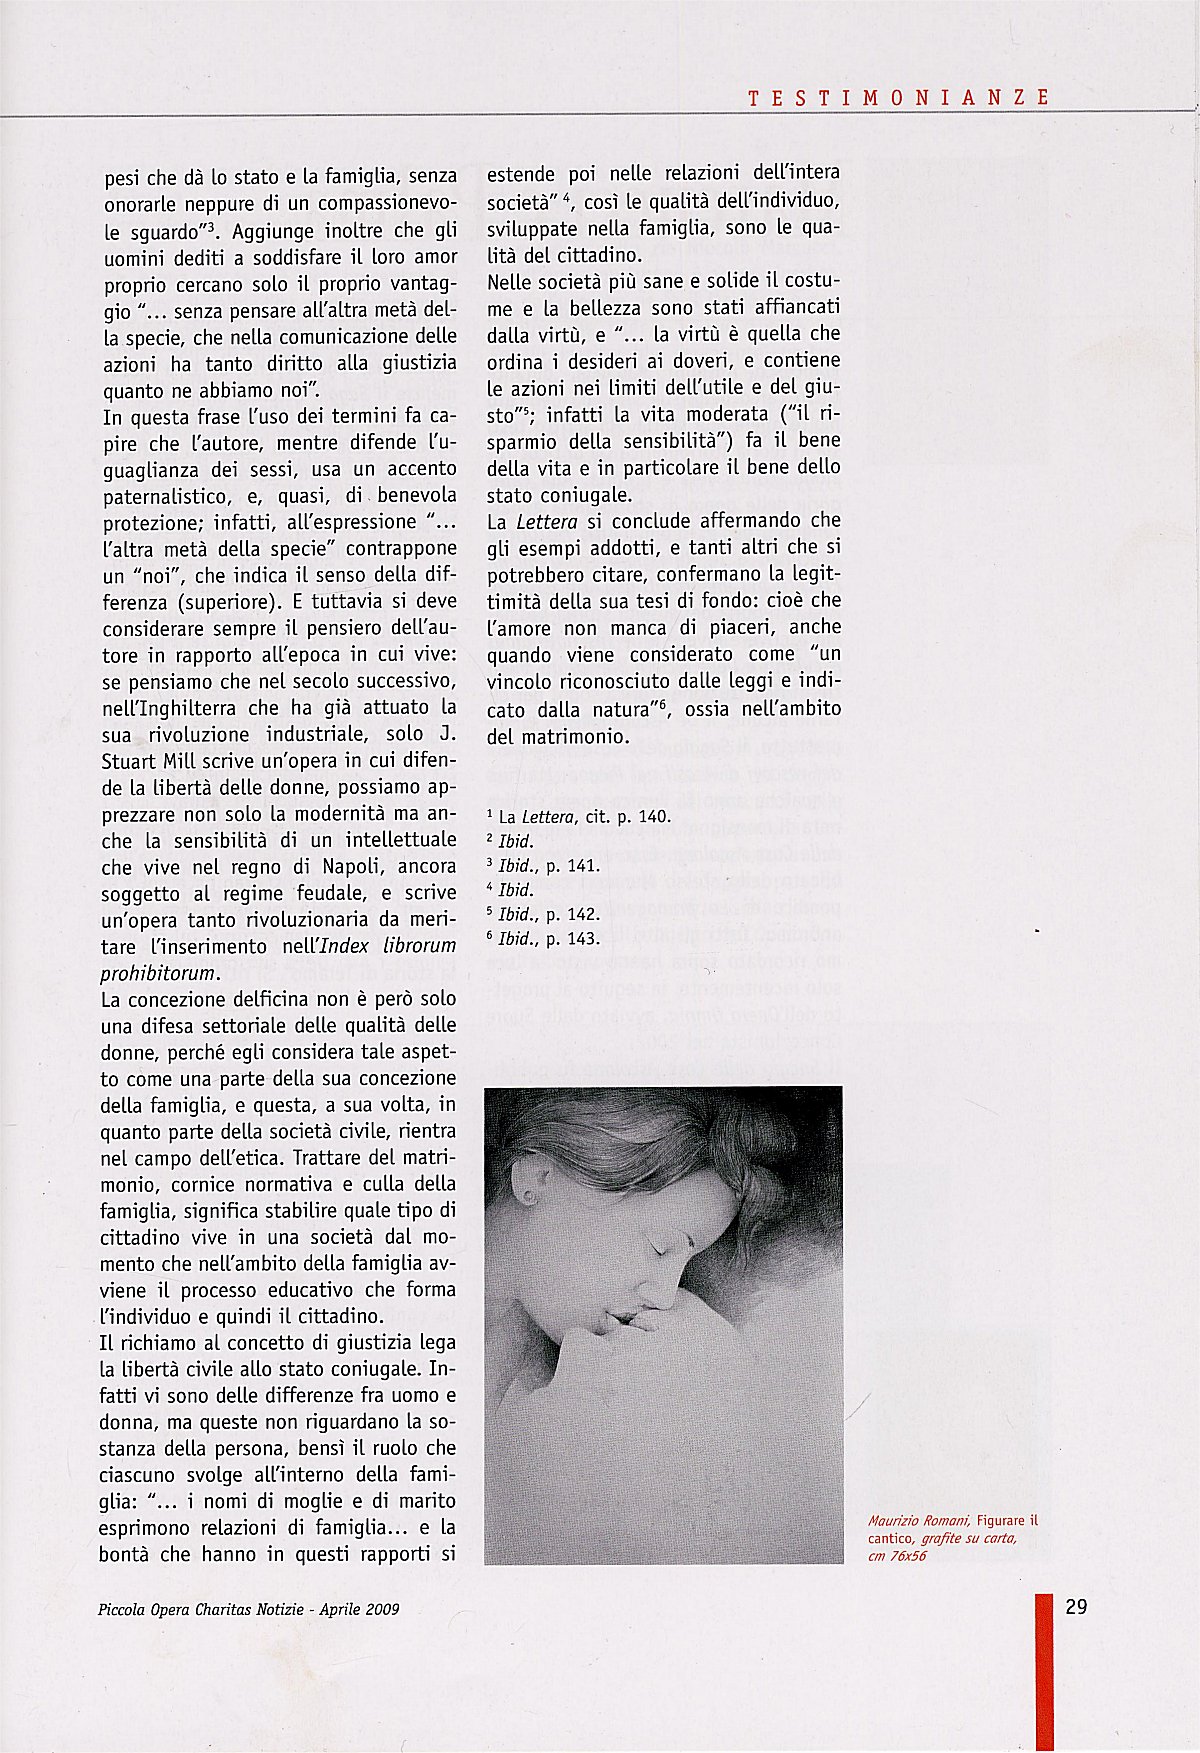 Piccola Opera Charitas, anno IX, n. 1, gennaio-aprile 2009, pag. 29